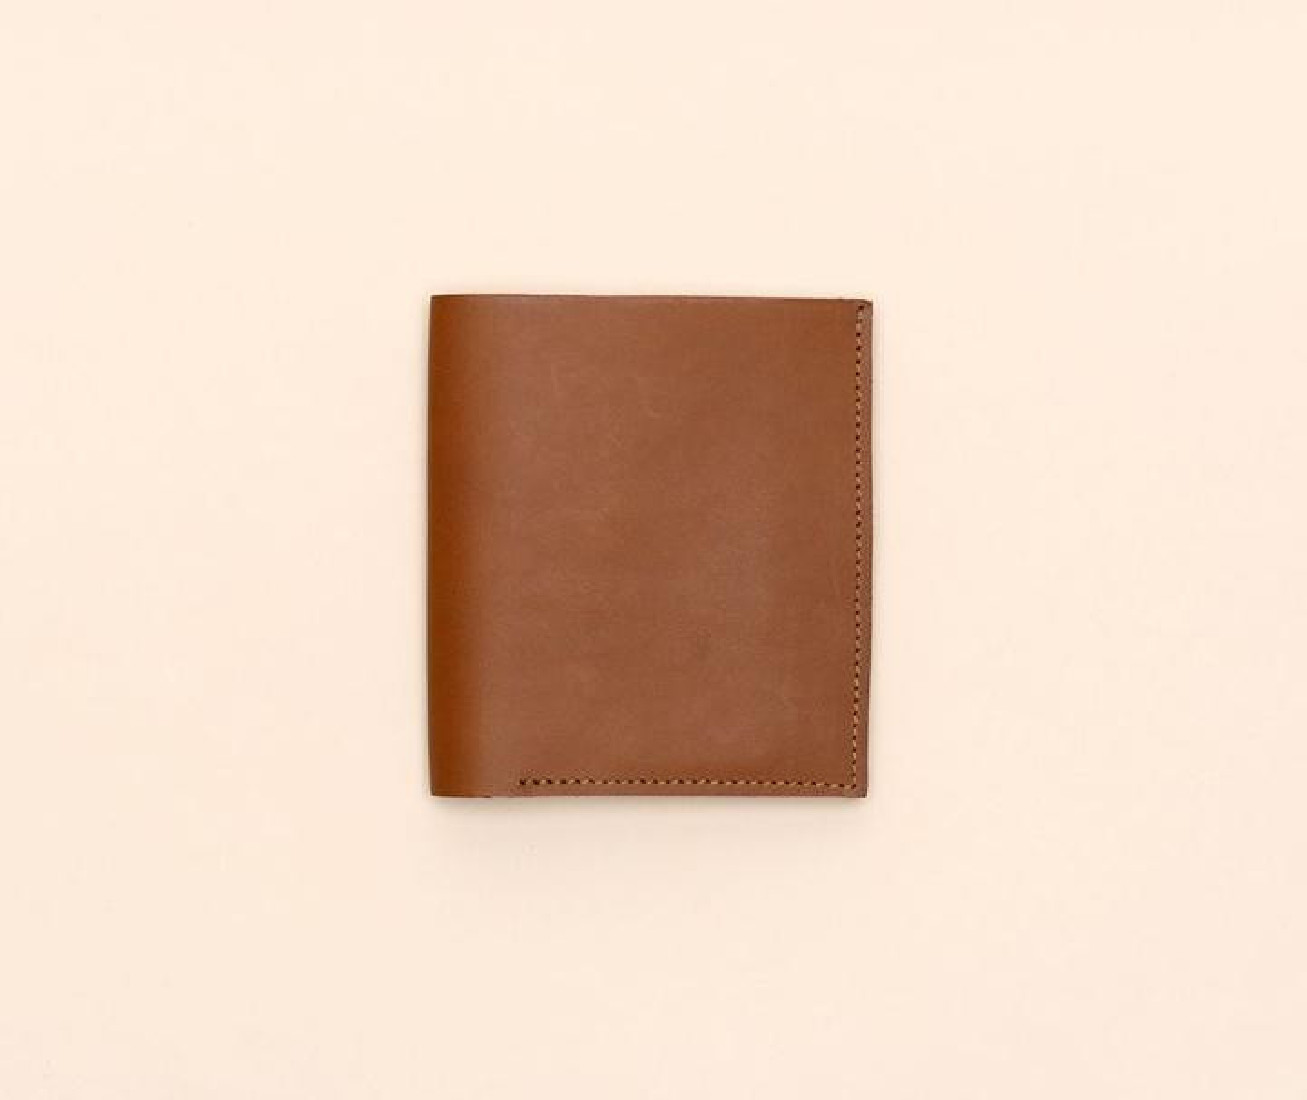 Paper Republic the square | leather wallet cognac & natural